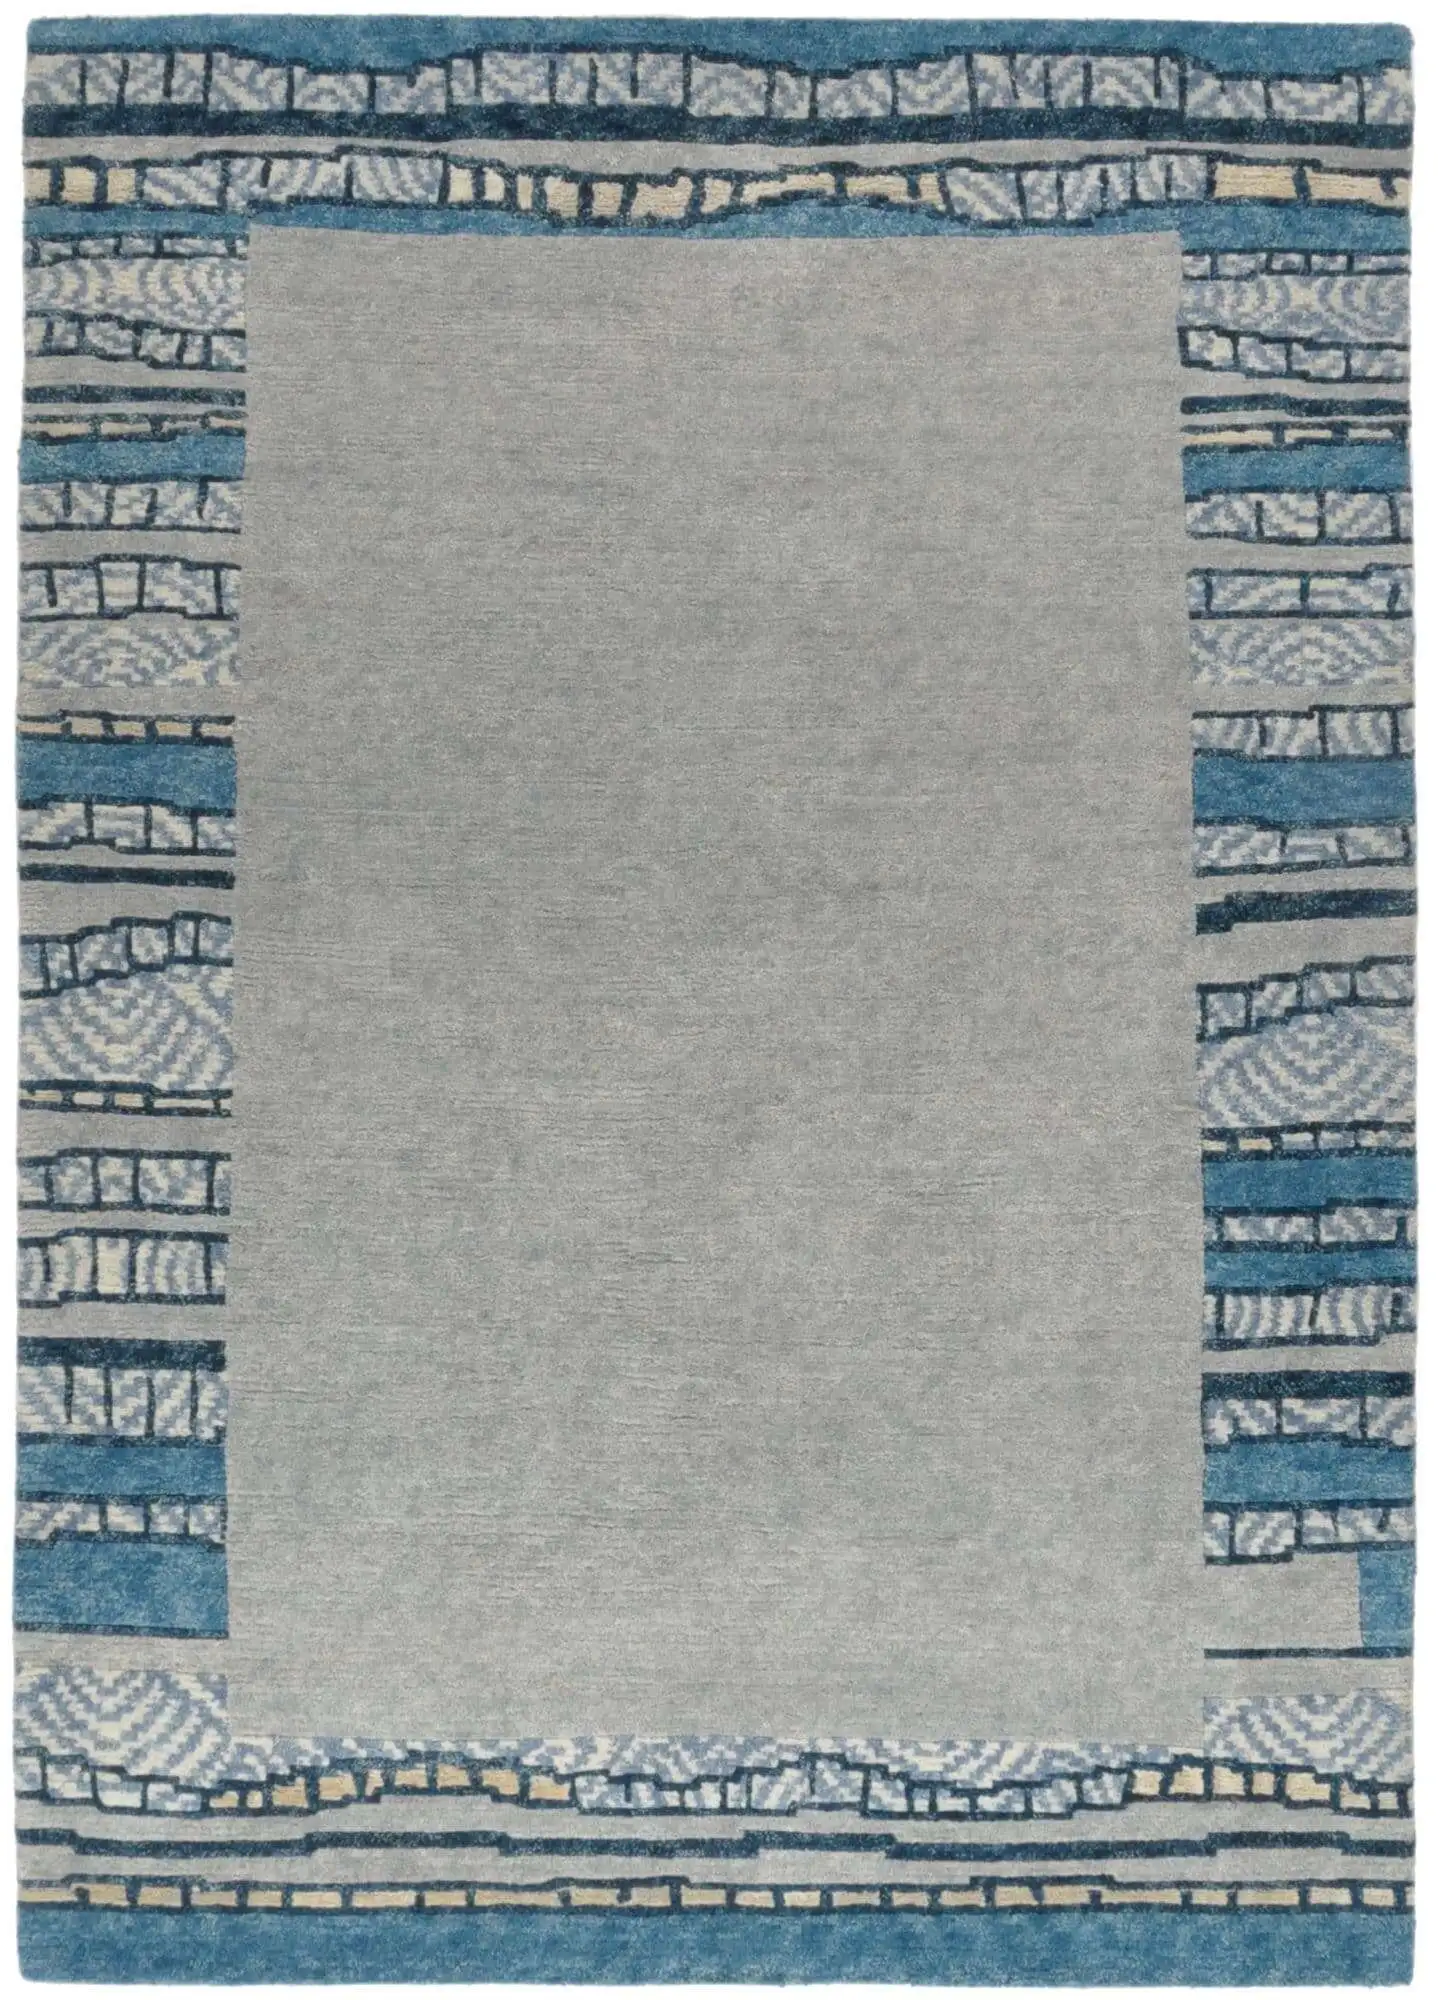 Talonga Silk Nepal Teppich RSK687-H34 im Wunschmaß